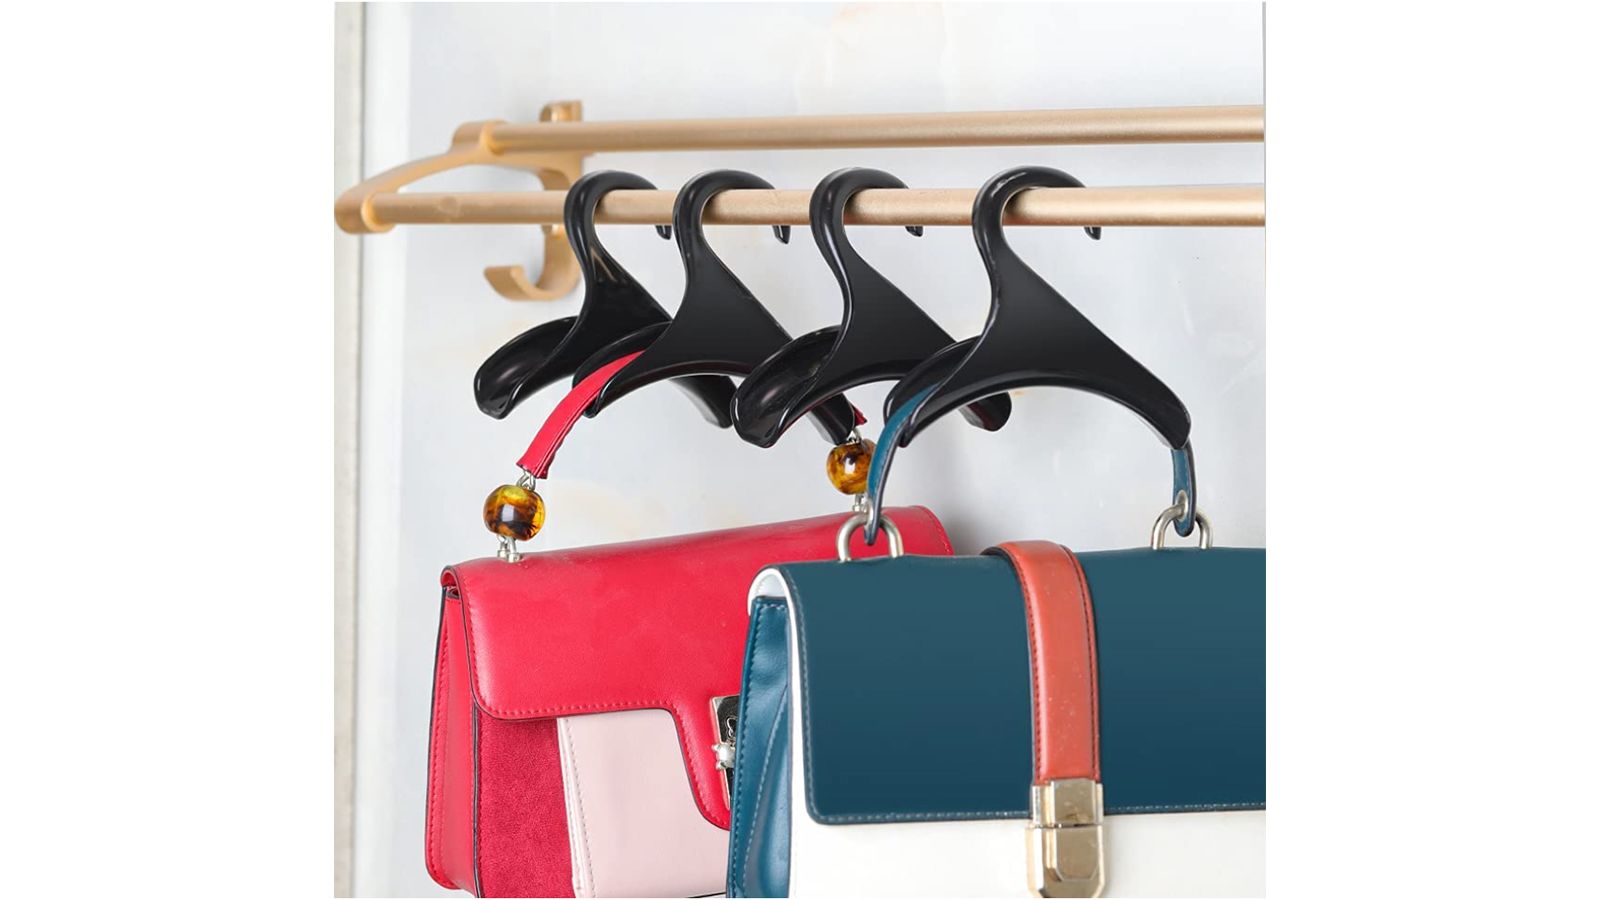  Purse Hanger Organizer for Closet 3 Pack - Durable